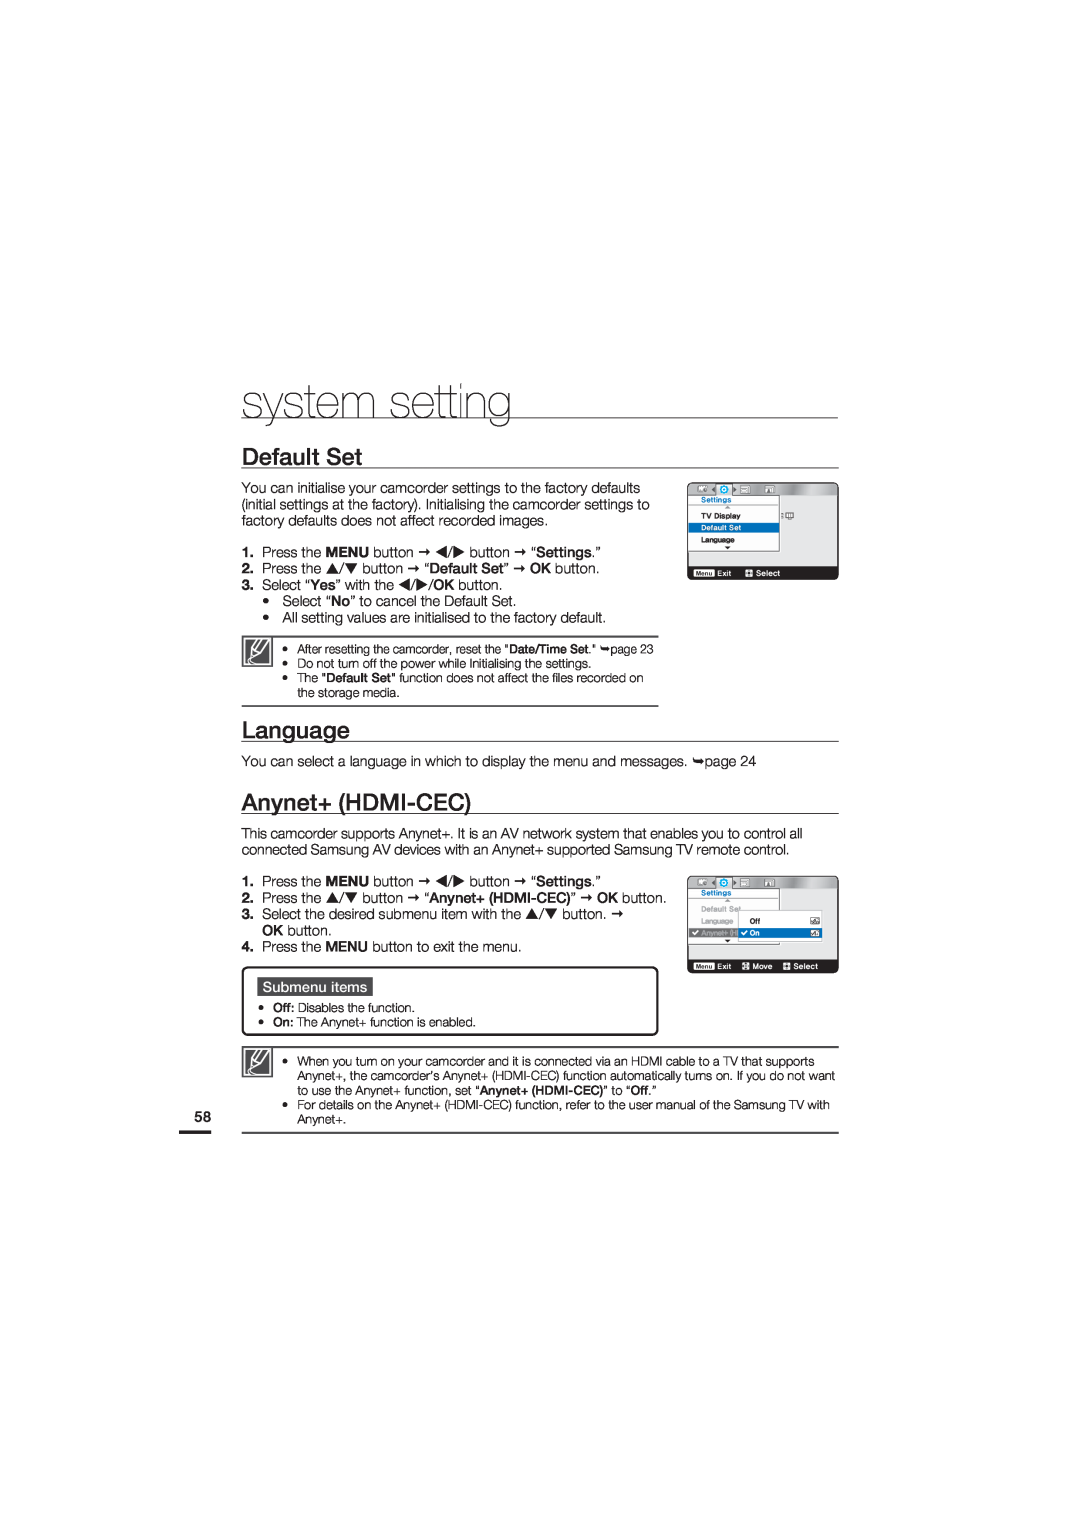 Samsung HMX-U20RP/XER, HMX-U20RP/EDC, HMX-U20BP/EDC Default Set, Language, Anynet+ HDMI-CEC, system setting, Submenu items 